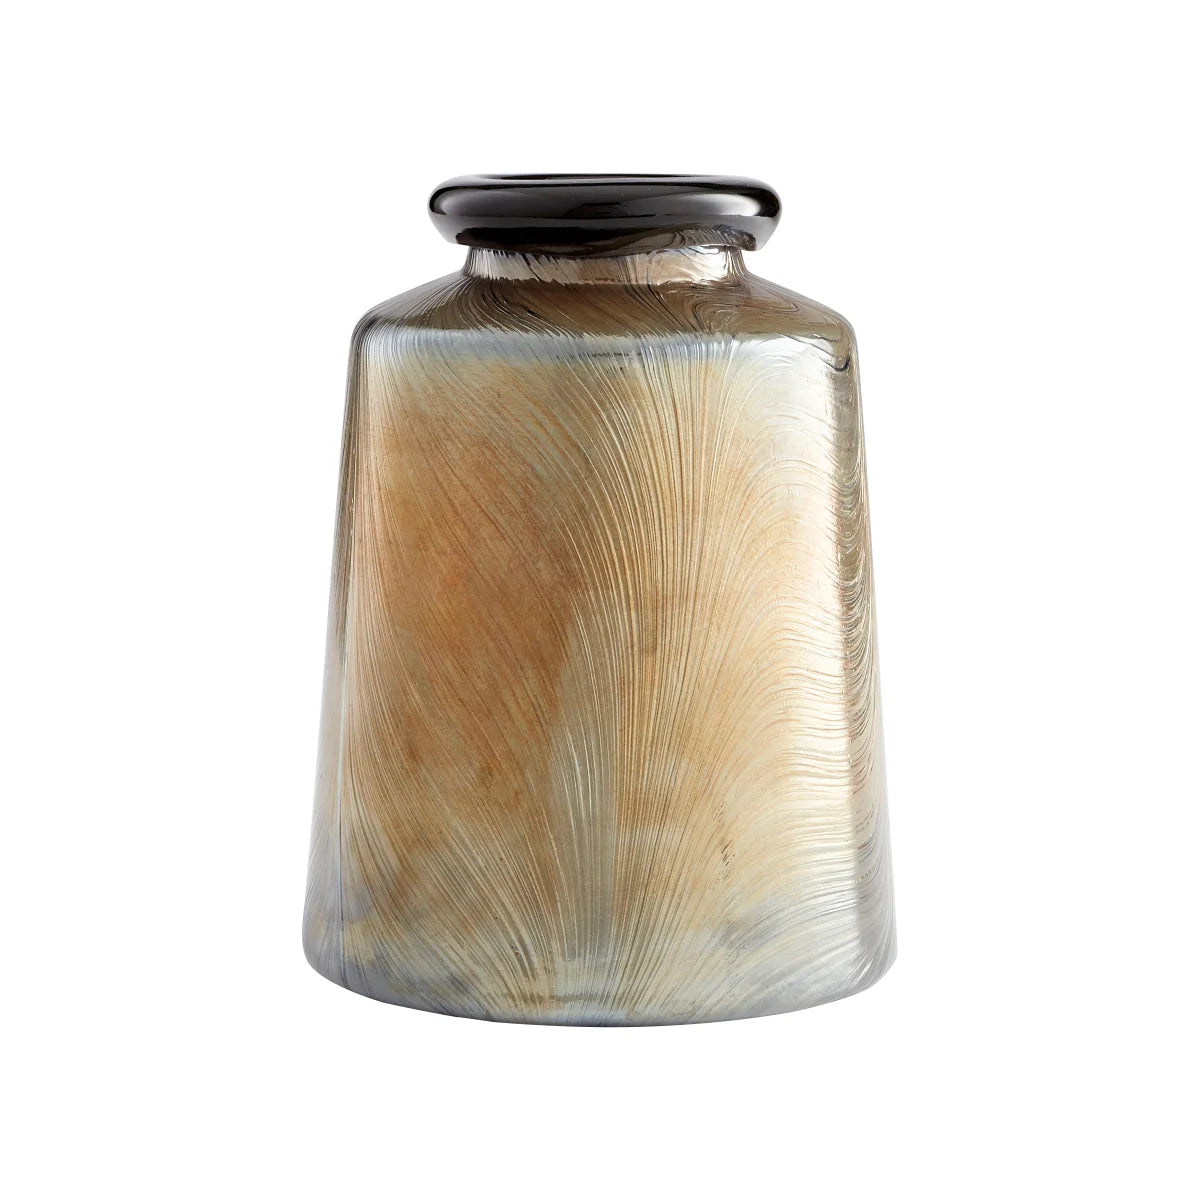 Cyan Design Cypress 10449 Glass Vase Home Decor - Damascus Grey